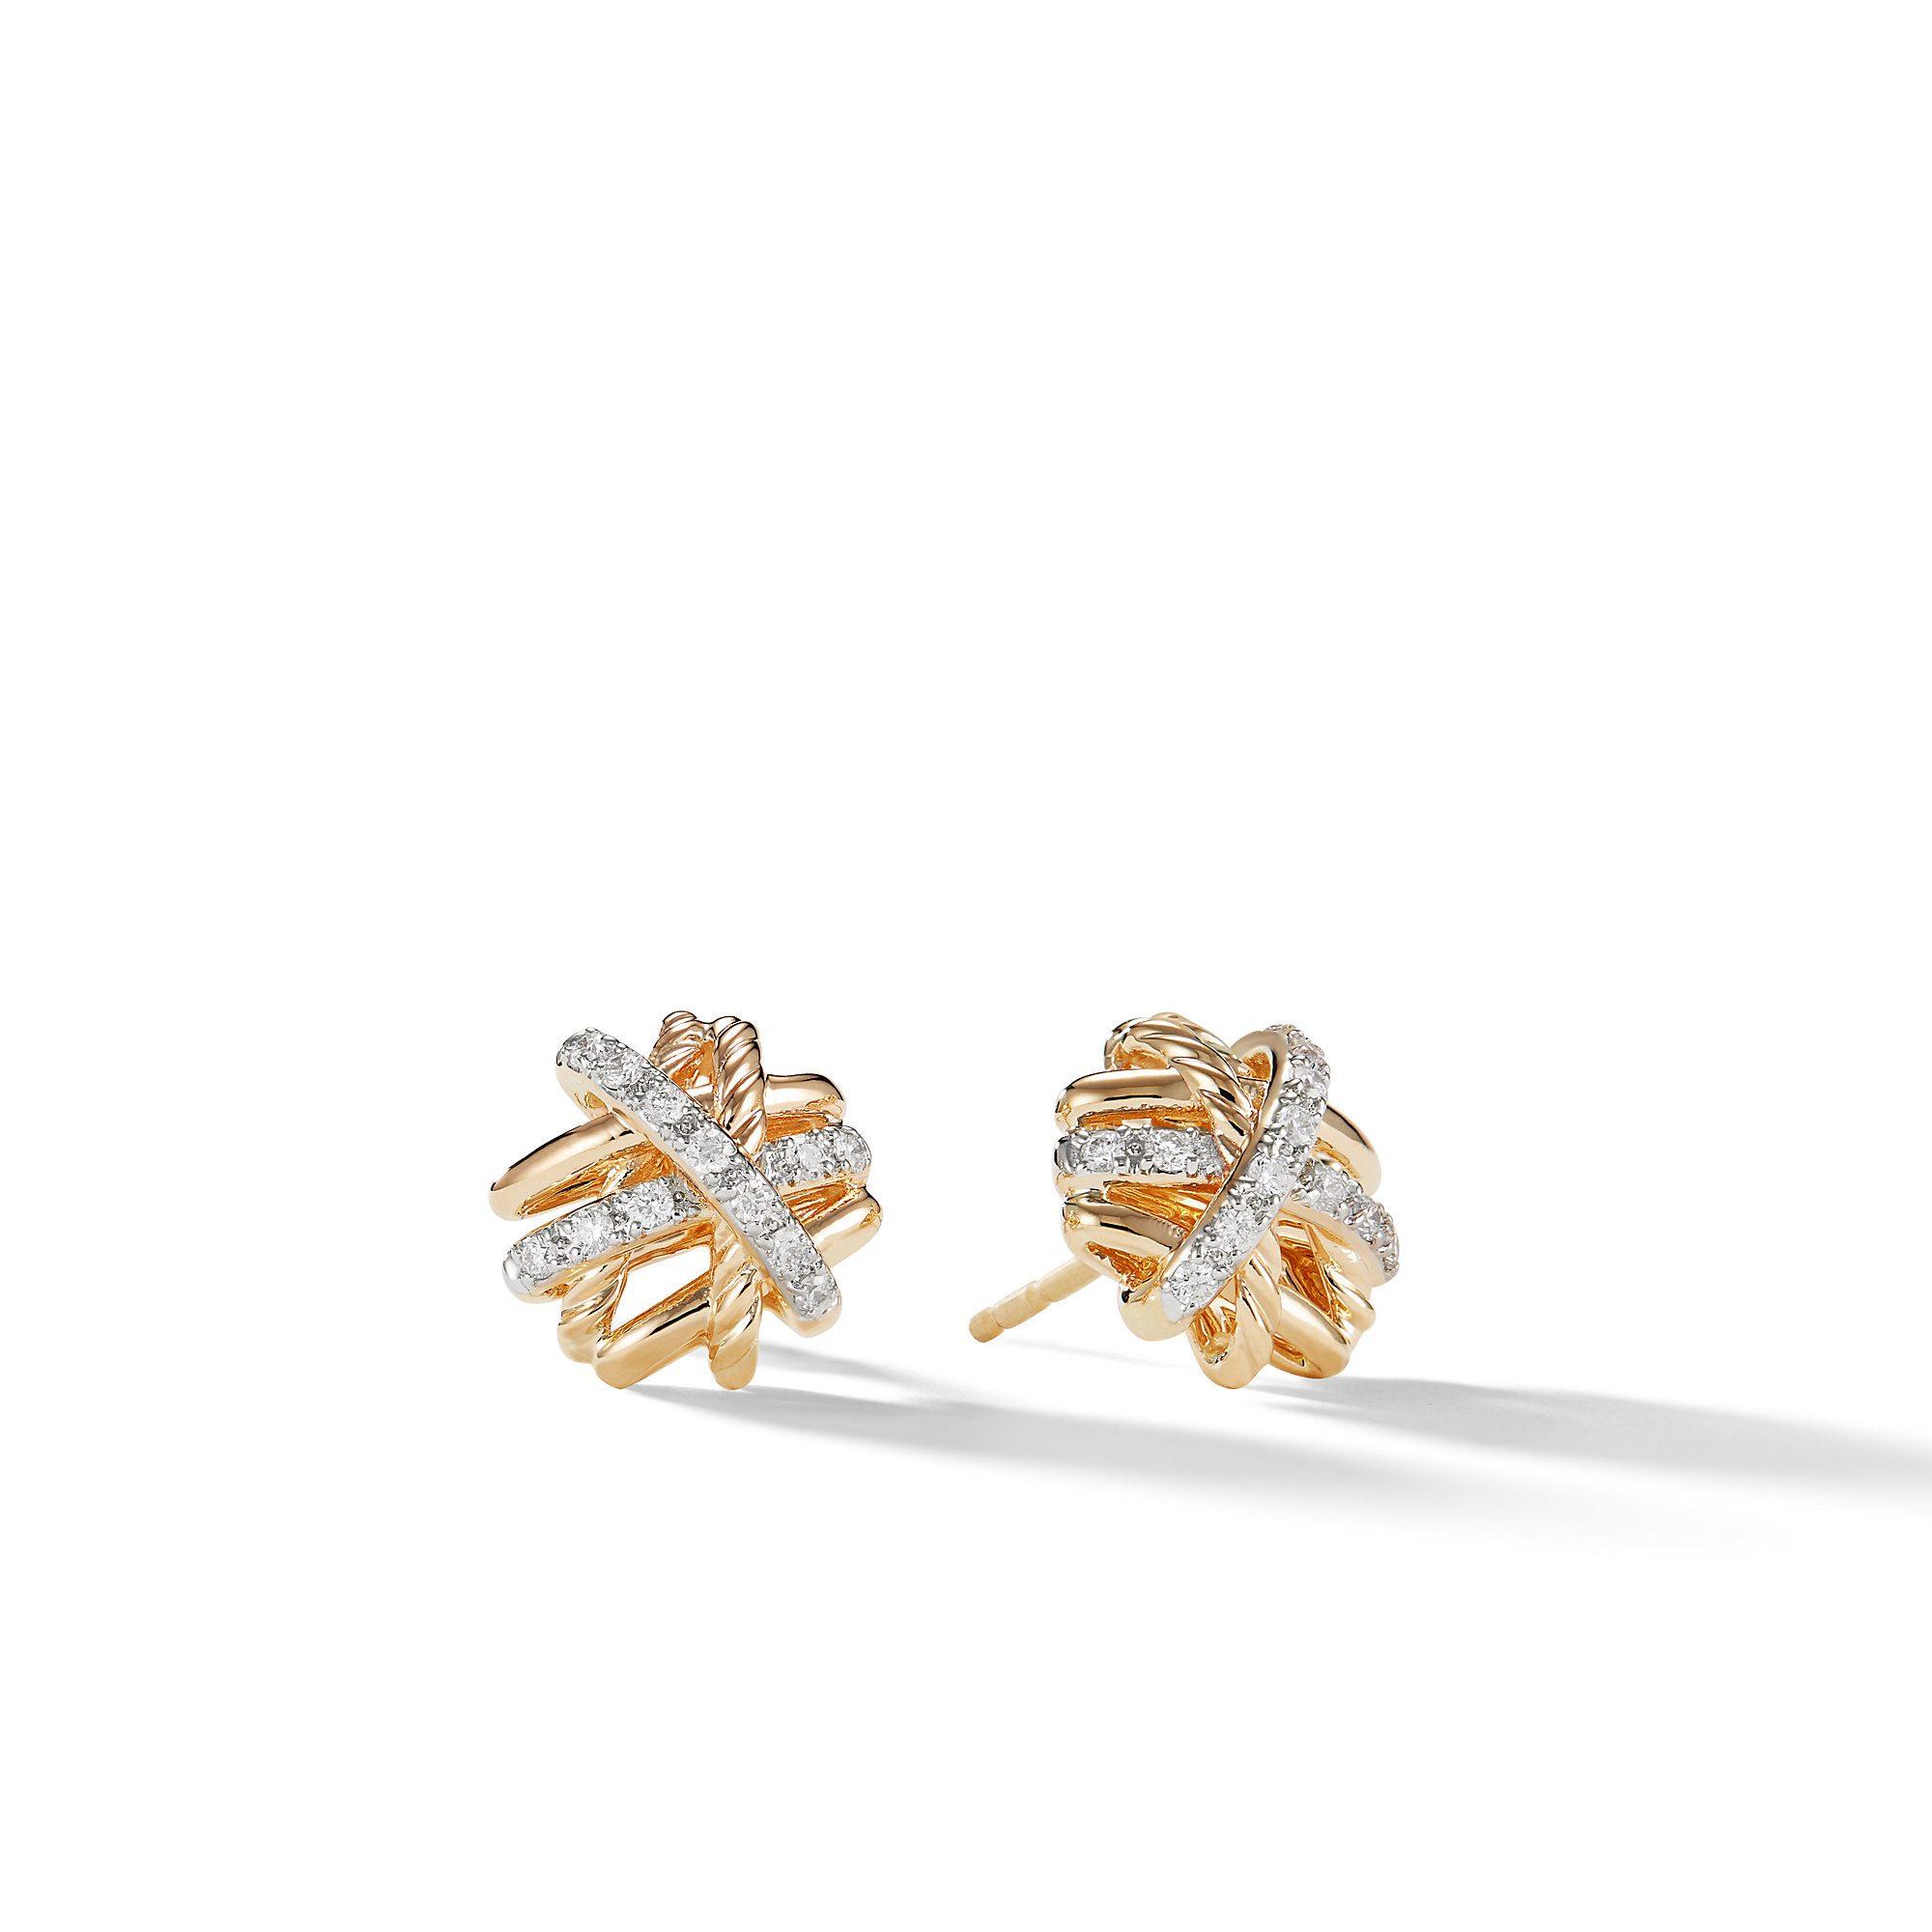 David Yurman Crossover Earrings with Diamonds in 18k Gold